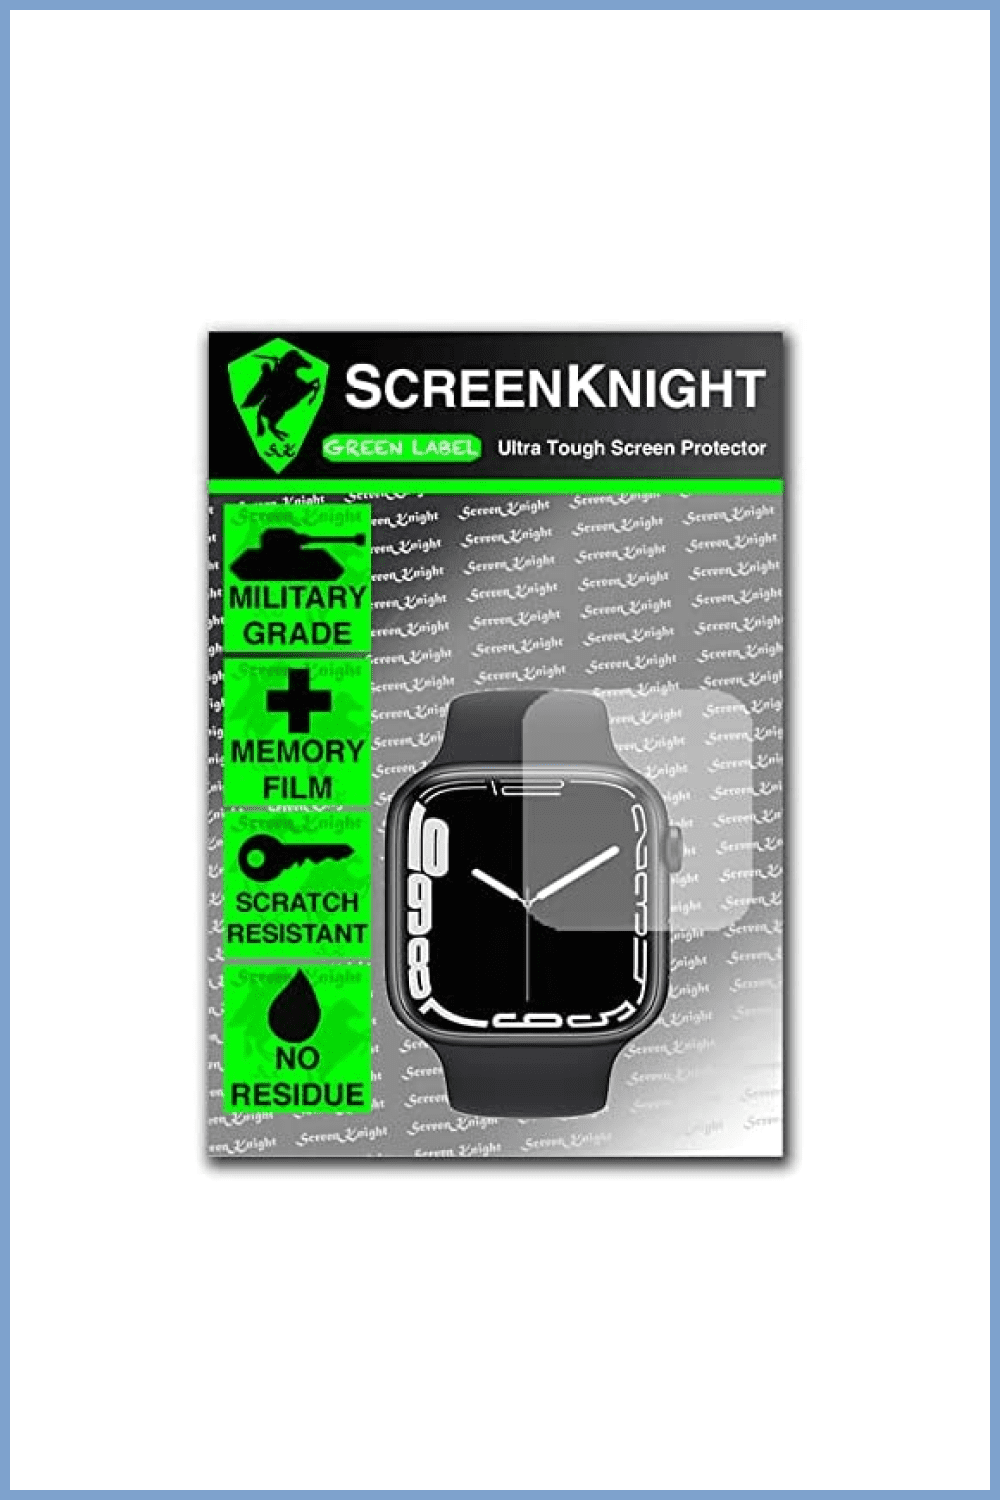 Package of ScreenKnight.